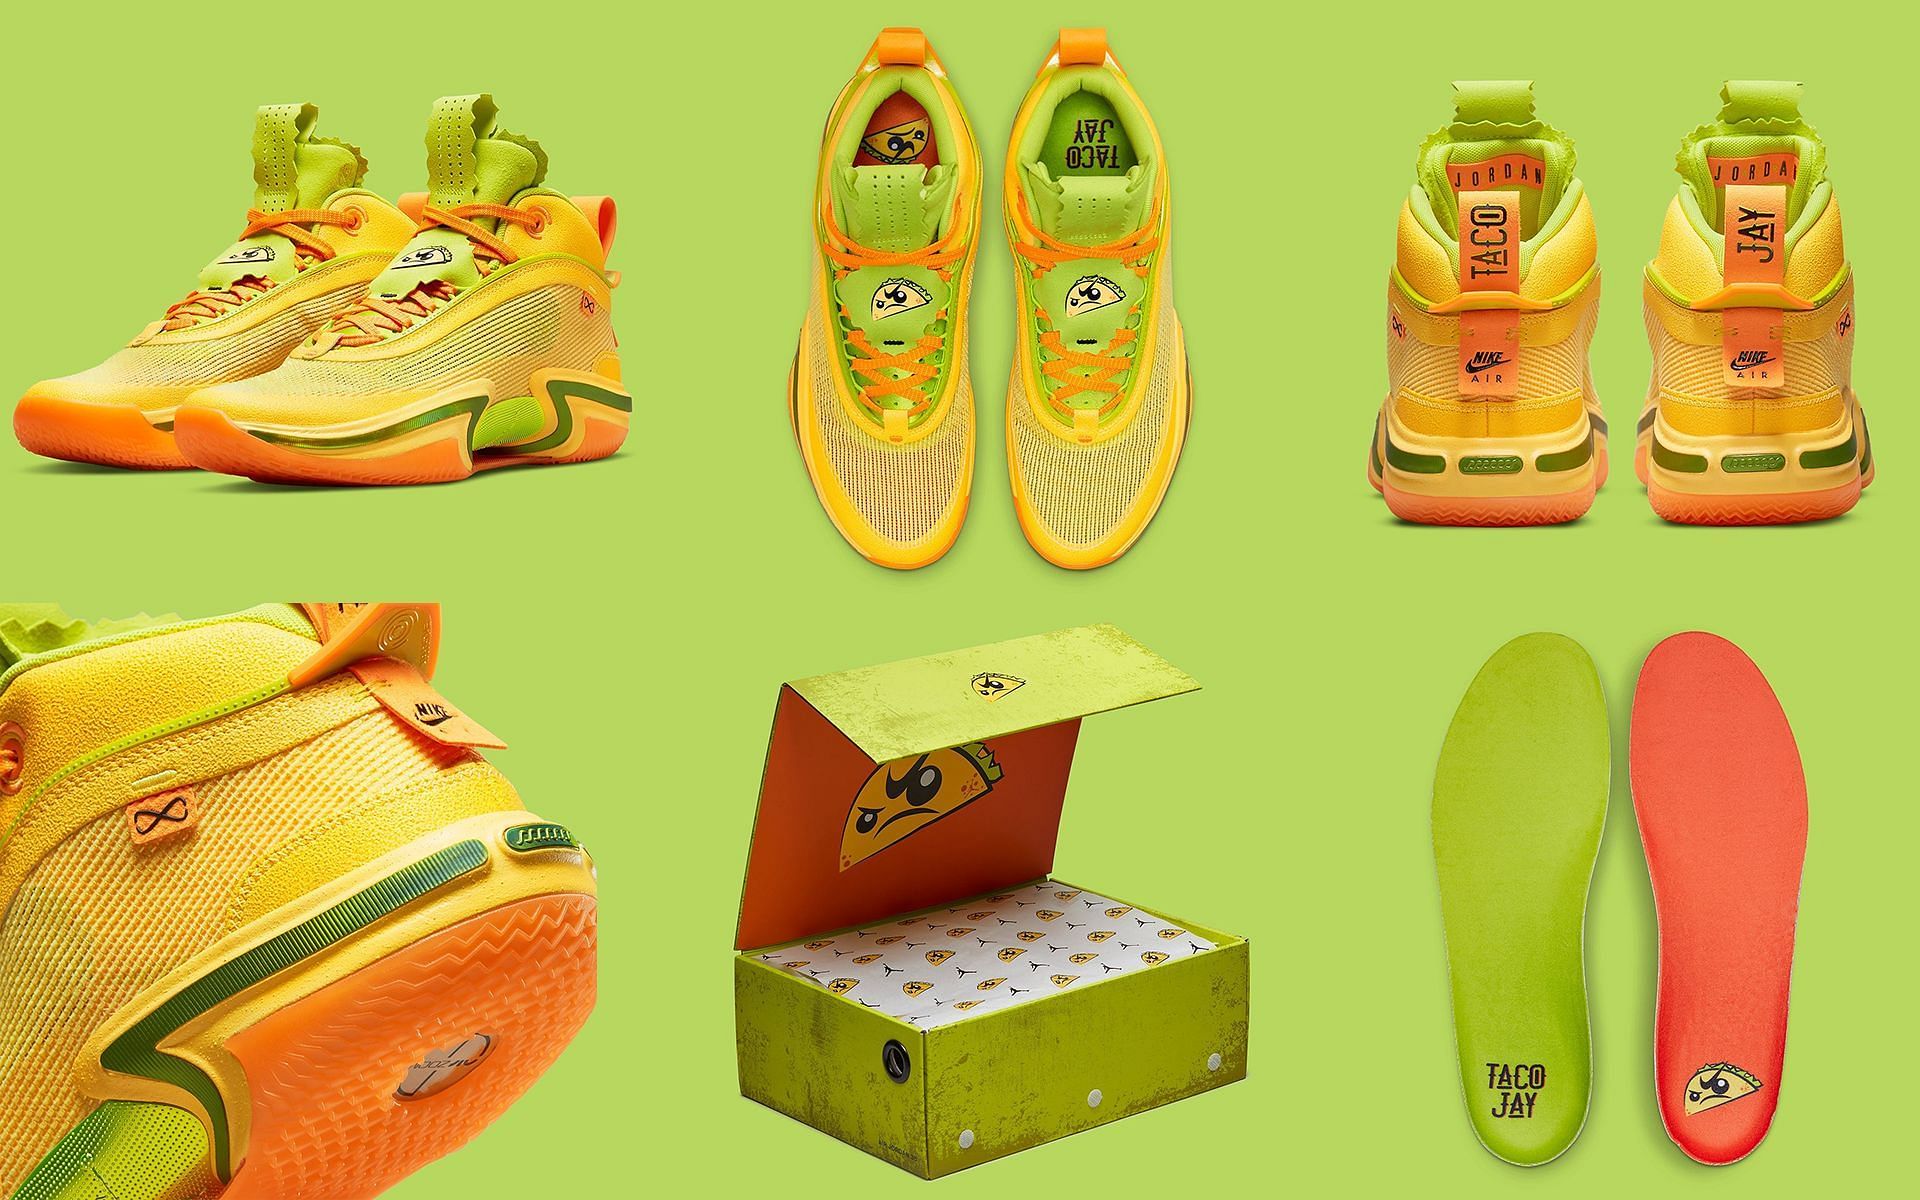 Take a closer look at the Air Jordan 9 Taco Jay shoes (Image via Sportskeeda)